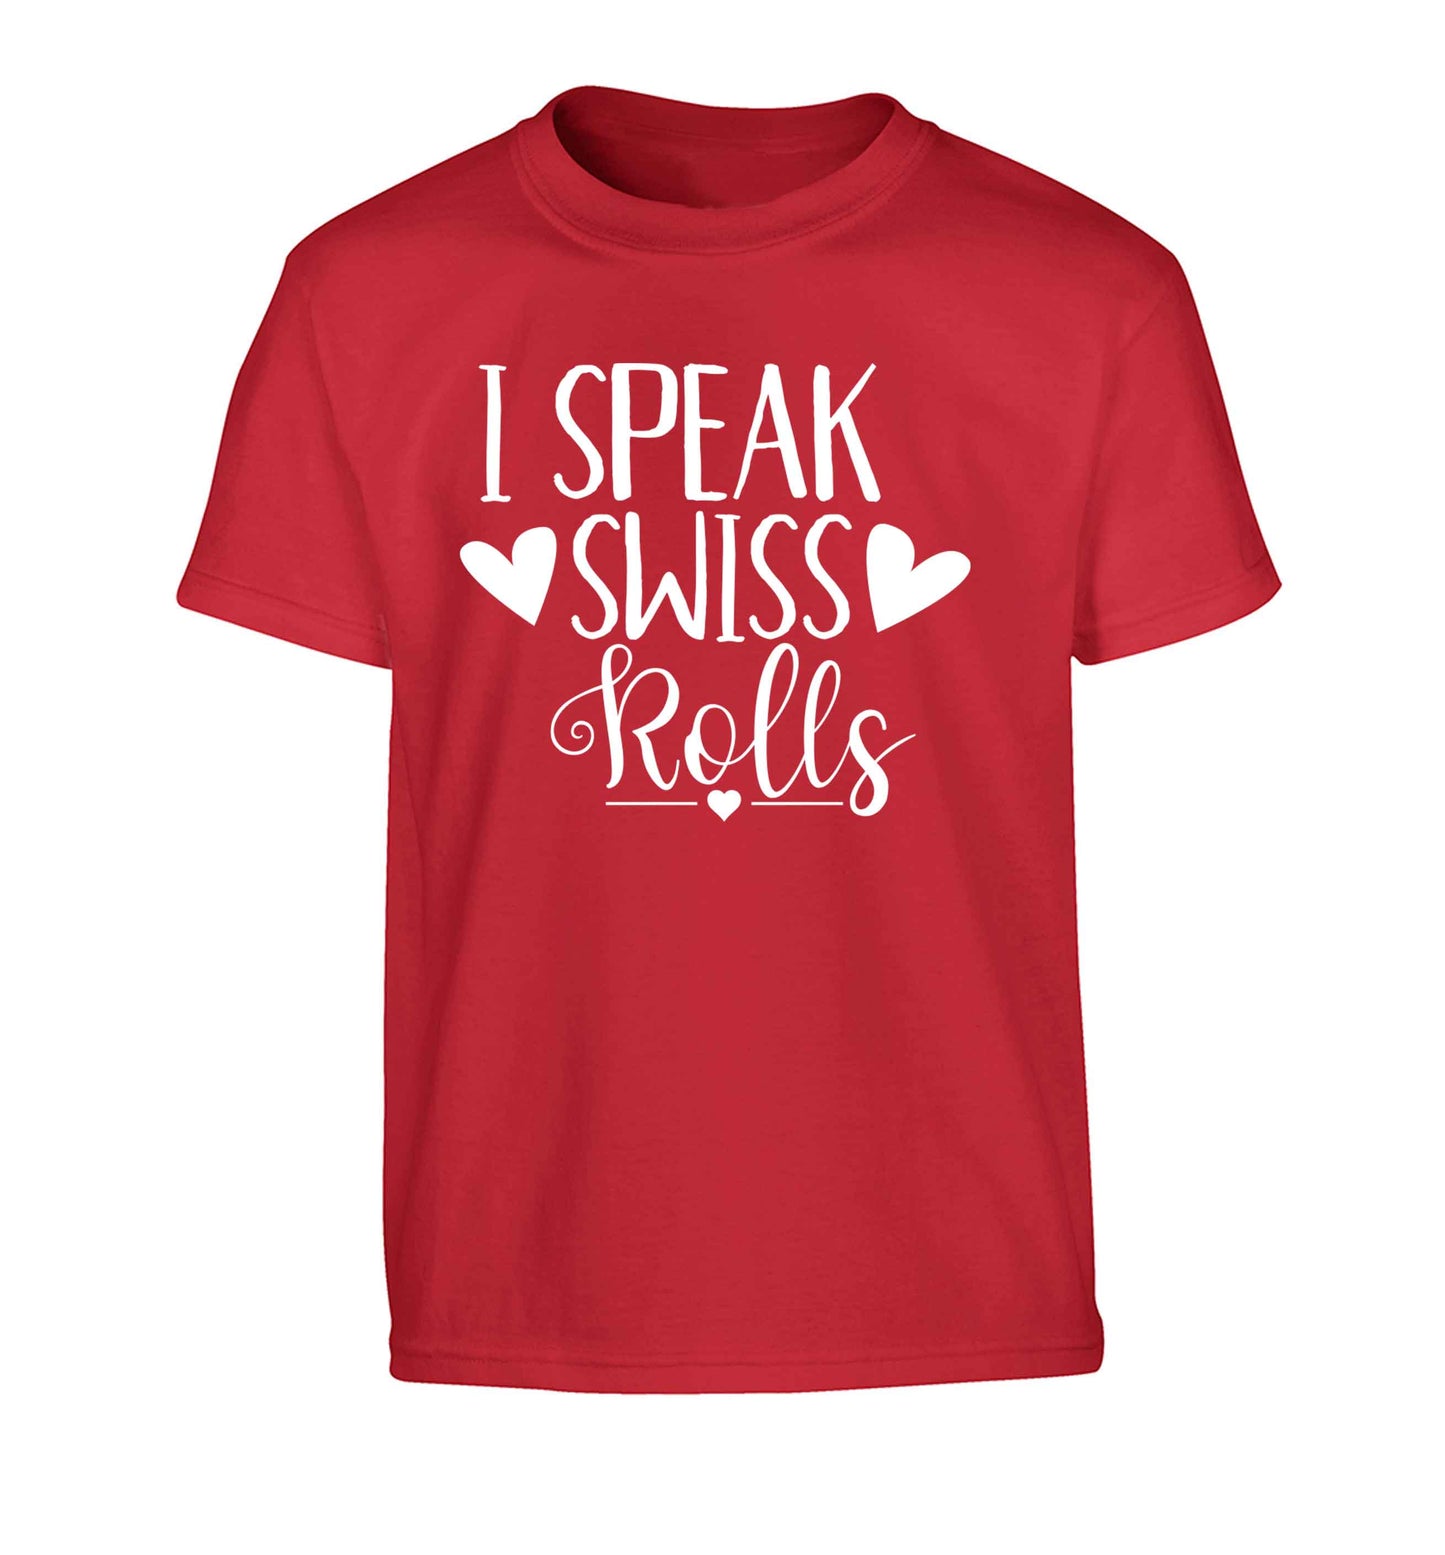 I speak swiss..rolls Children's red Tshirt 12-13 Years